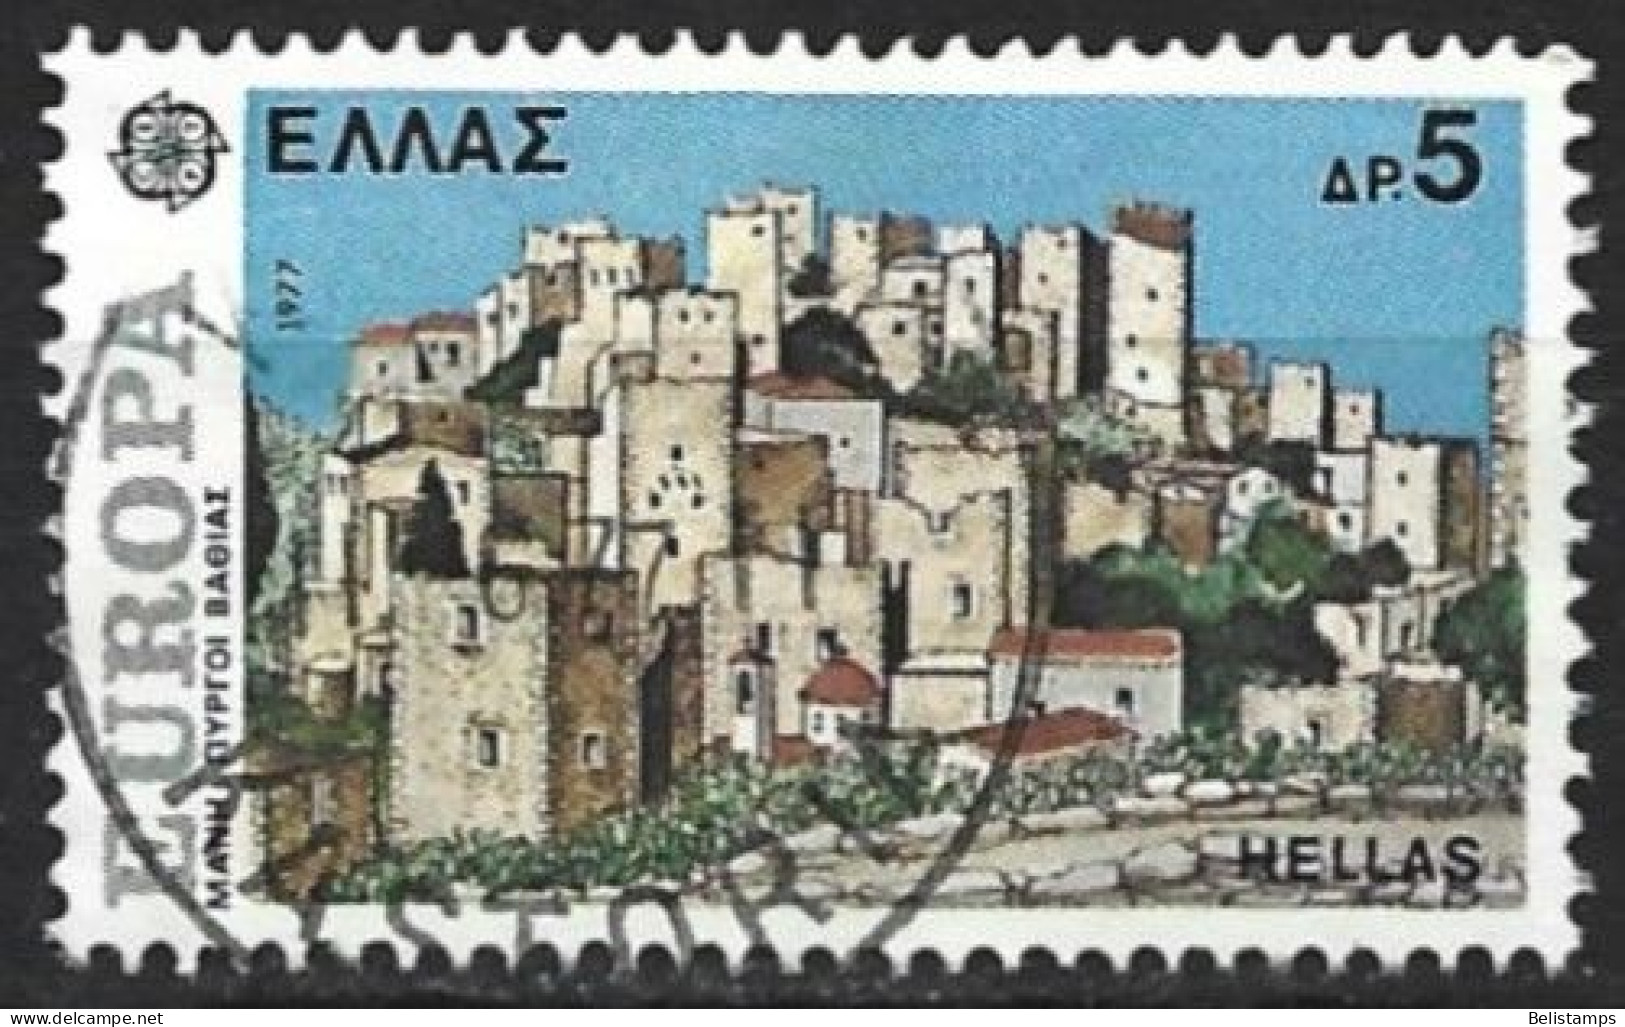 Greece 1977. Scott #1205 (U) Europa, Mani Castle, Vathia - Used Stamps